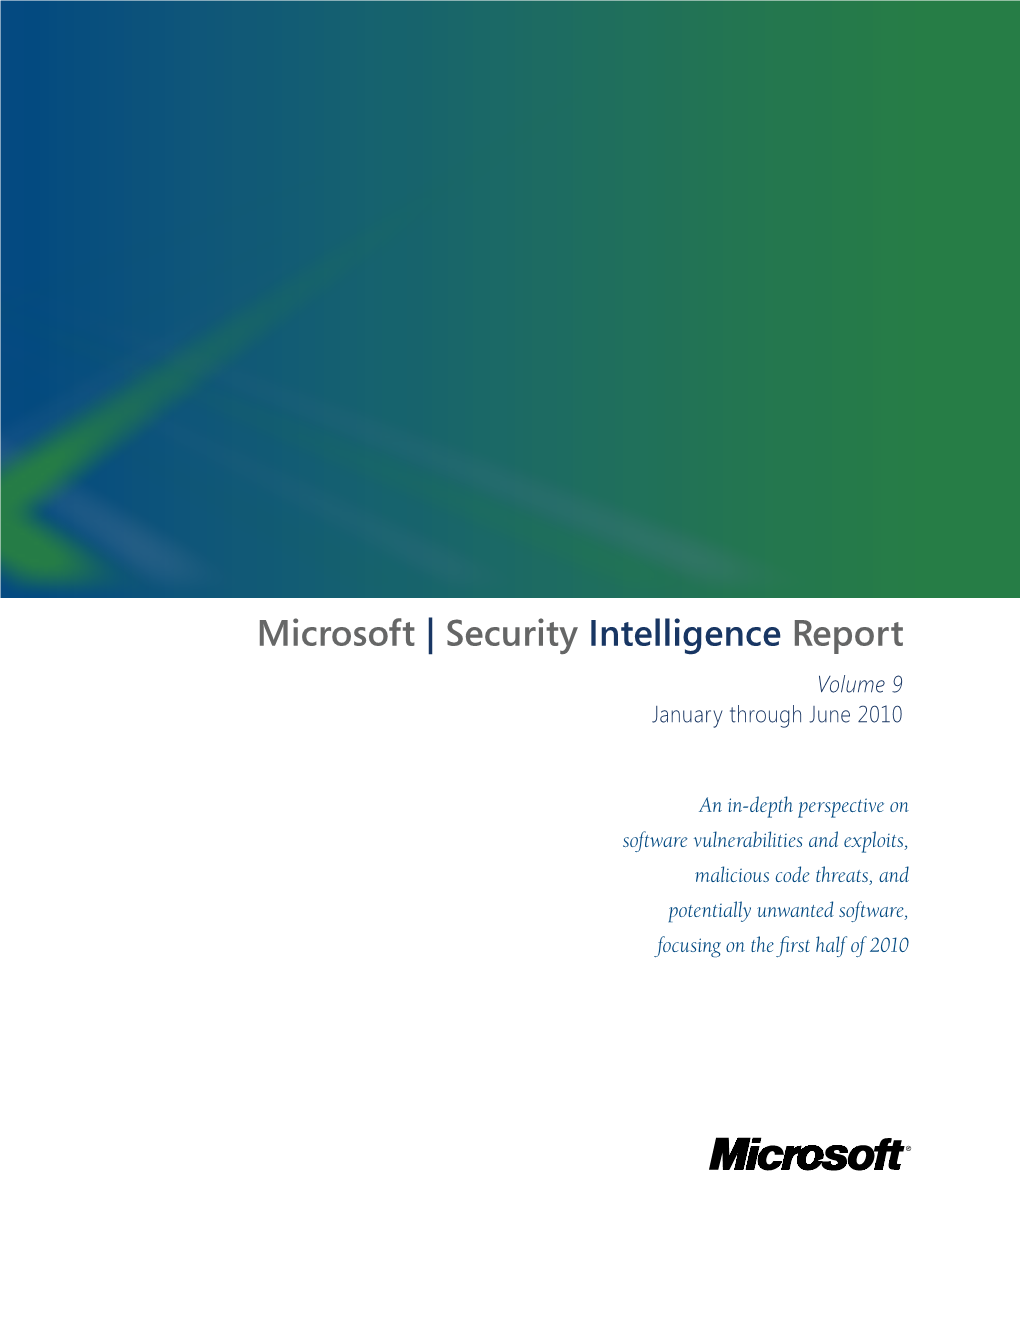 Microsoft | Security Intelligence Report Volume 9 January Through June 2010